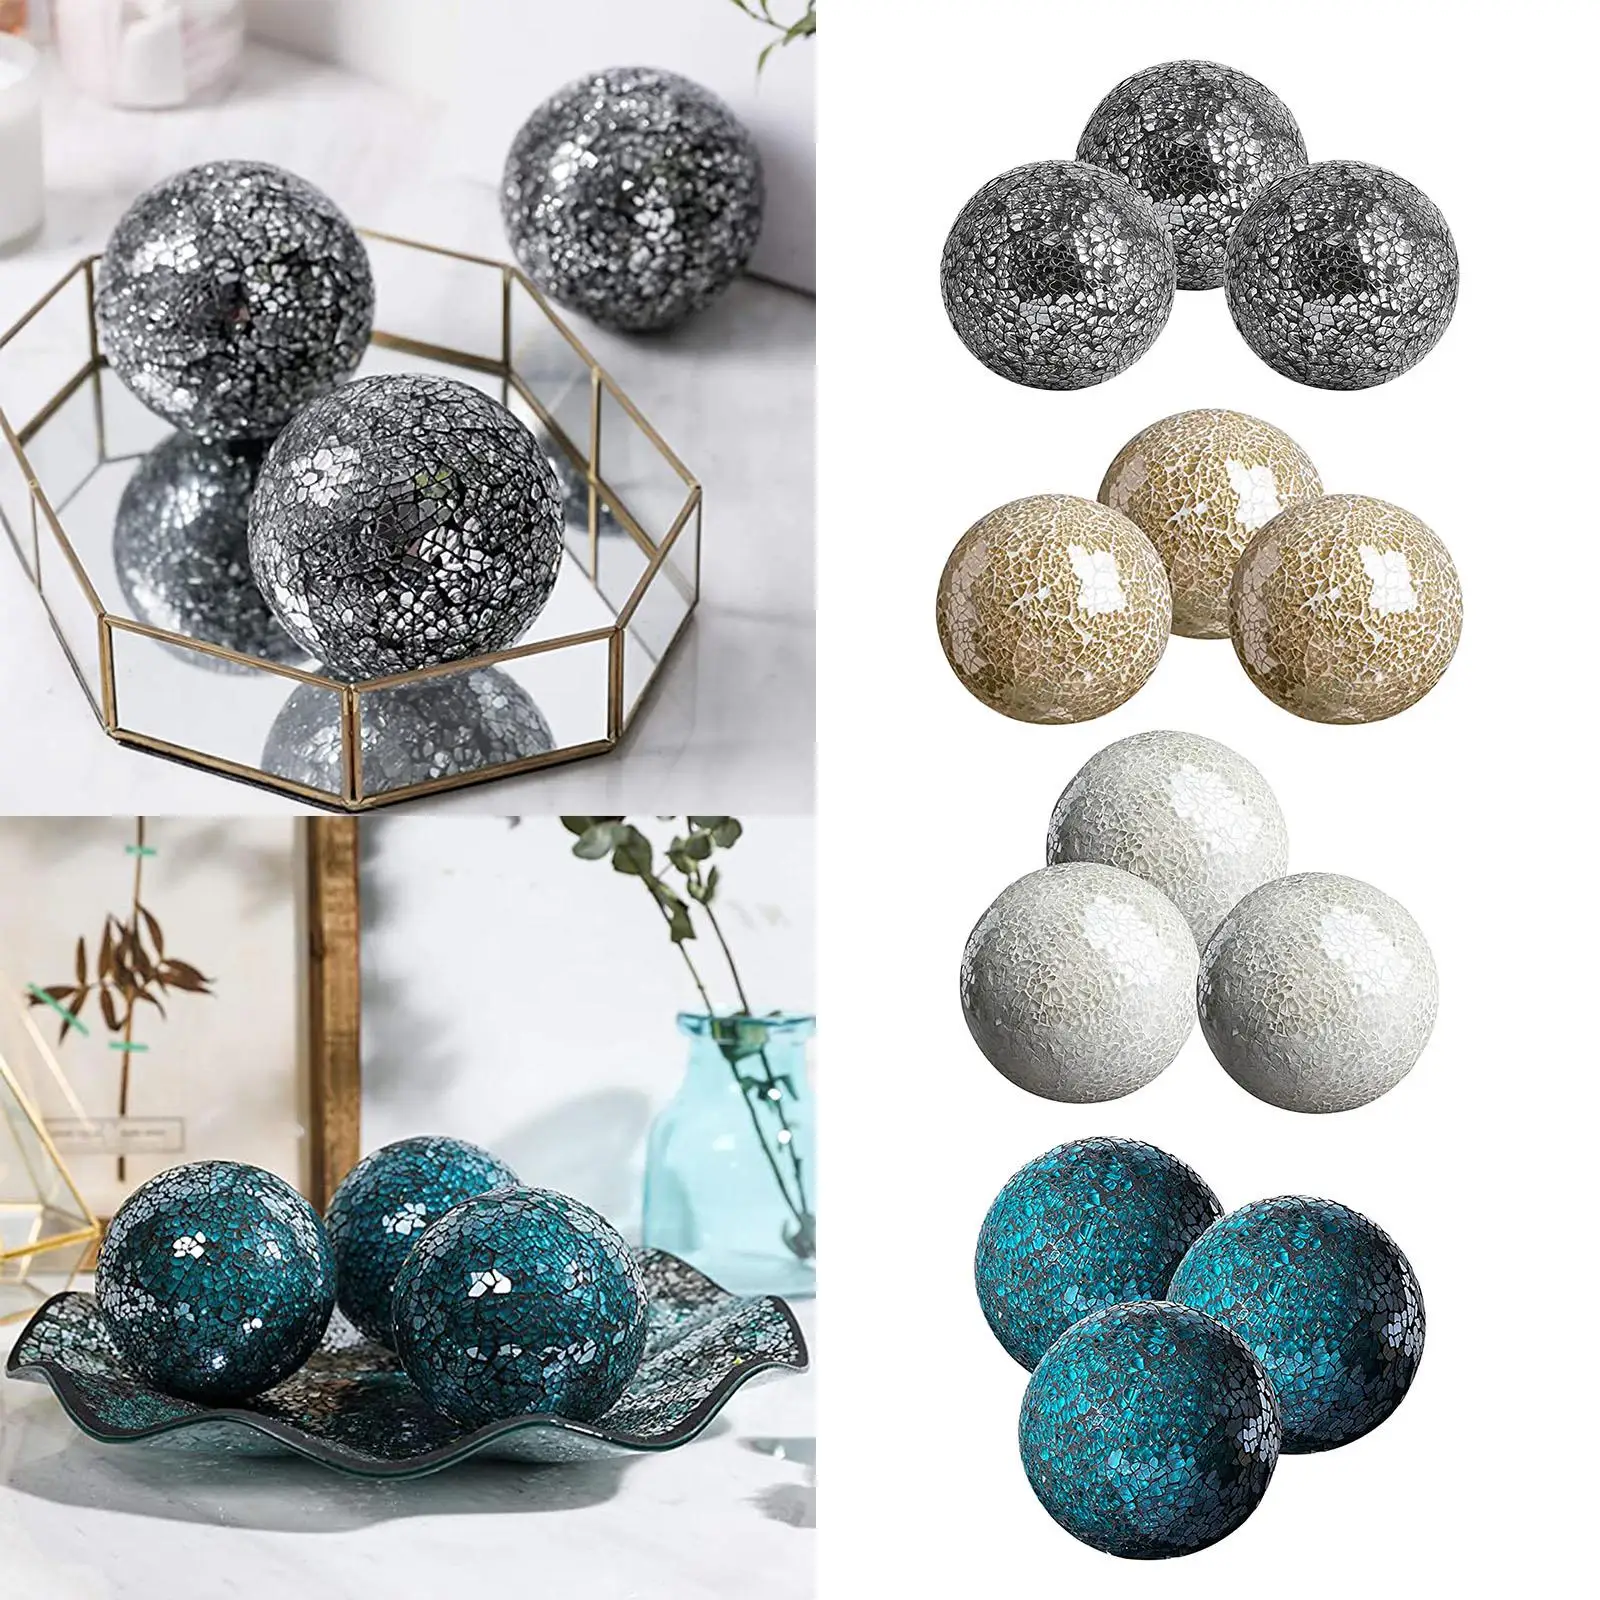 3Pcs Housewares Glass Decorative Balls Home Decor Mosaic Sphere Ball Set for Bowls Vases Tray And Centerpiece